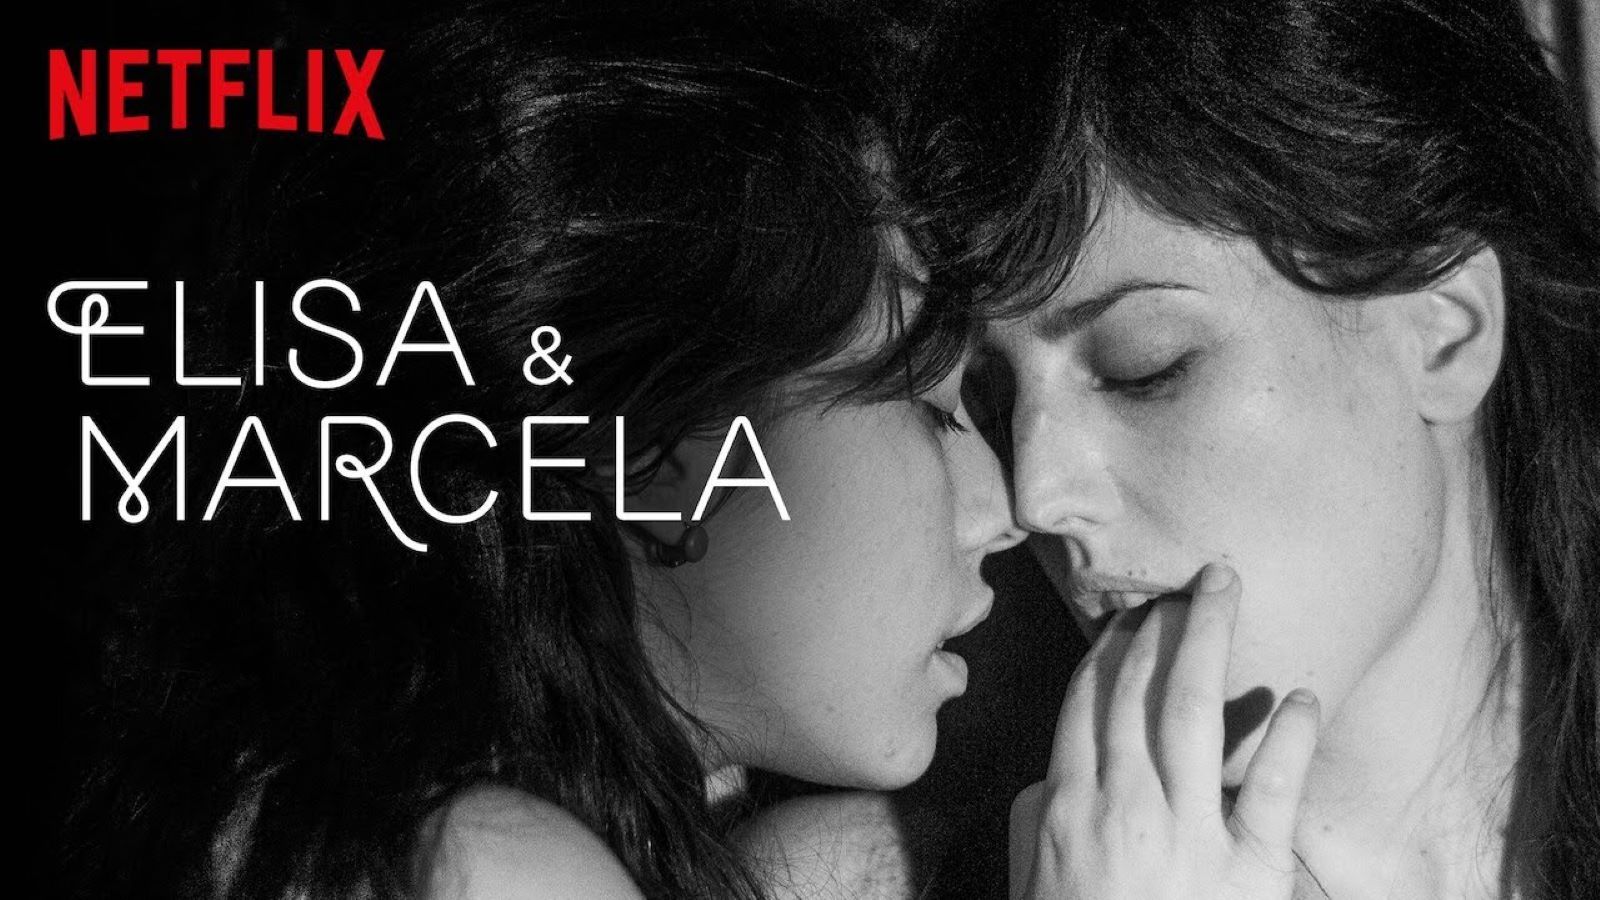 Elisa and marcela lesbian romance movies